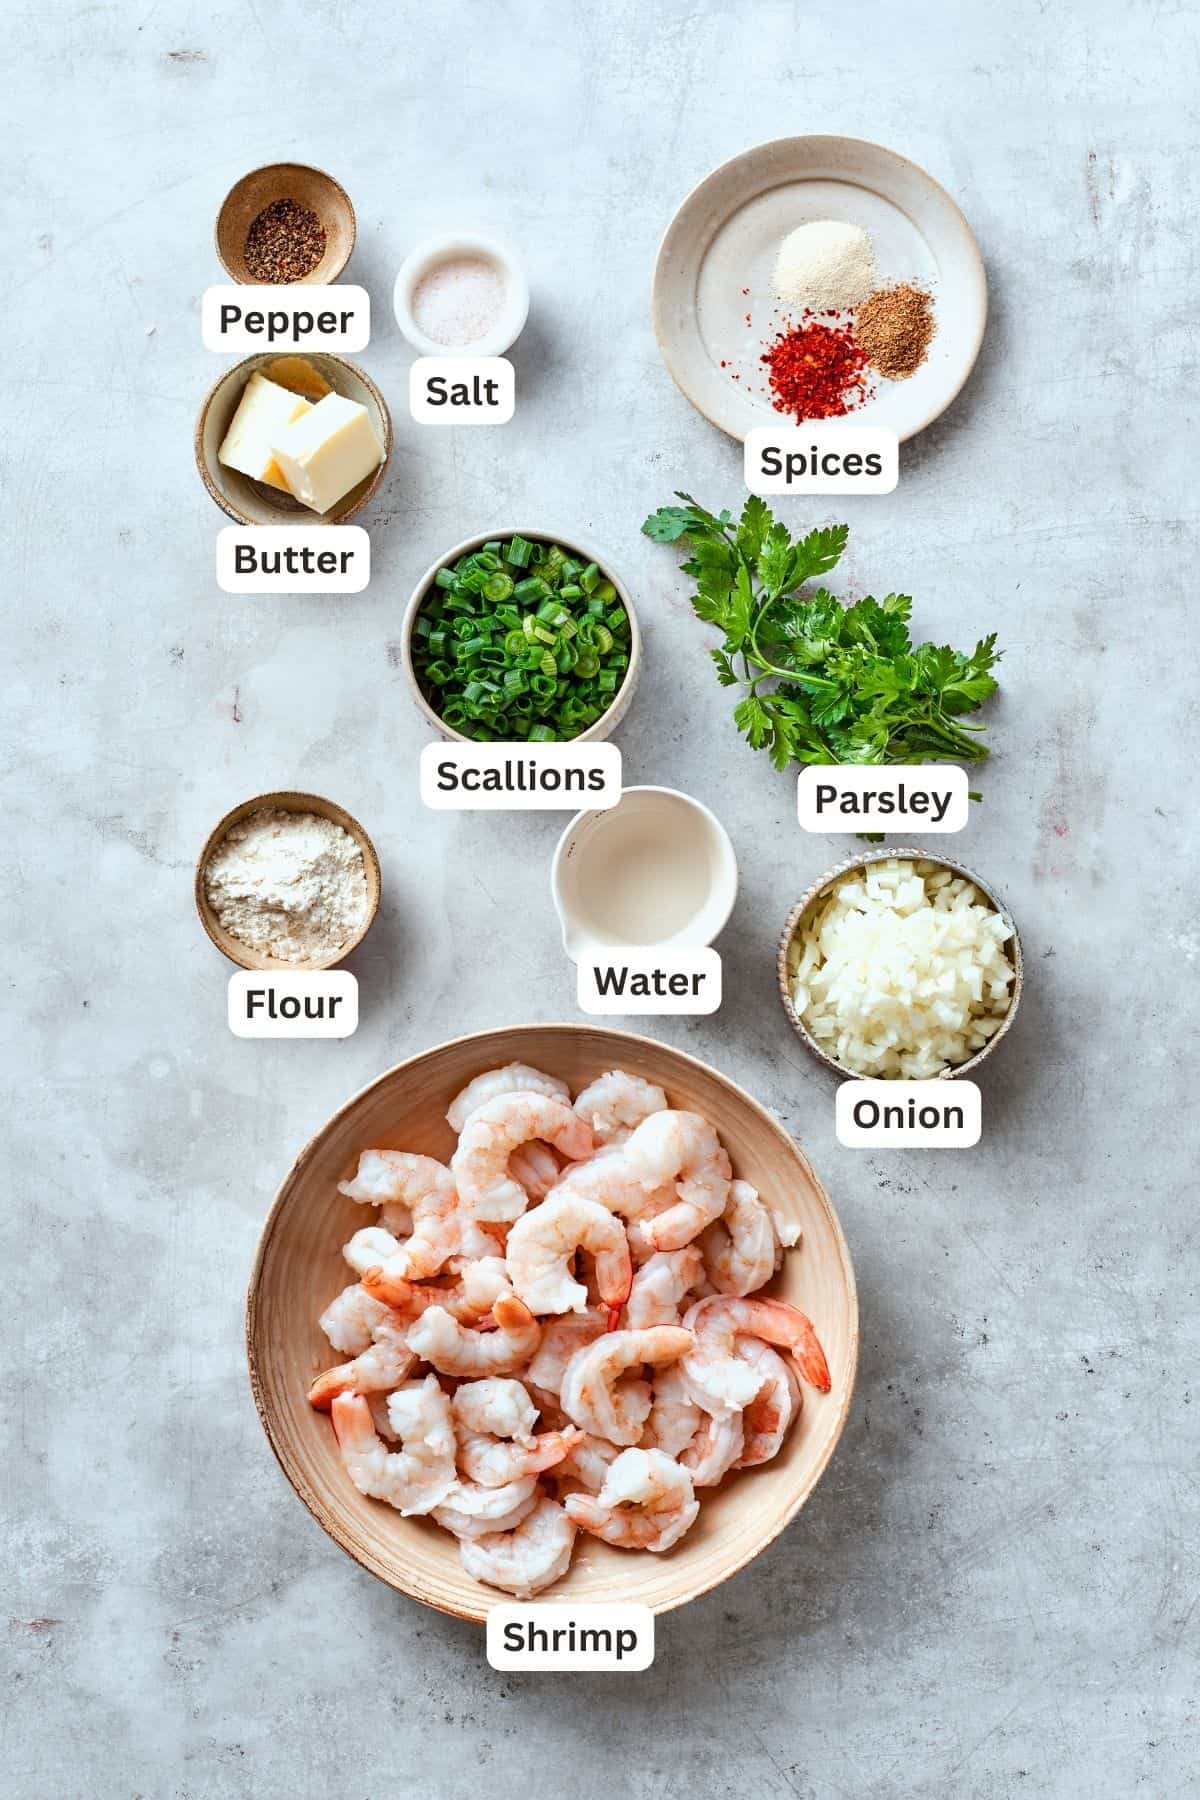 The ingredients for shrimp burgers are shown labelled: butter, pepper, salt, flour, spices, parsley, onion, water, scallions, shrimp.